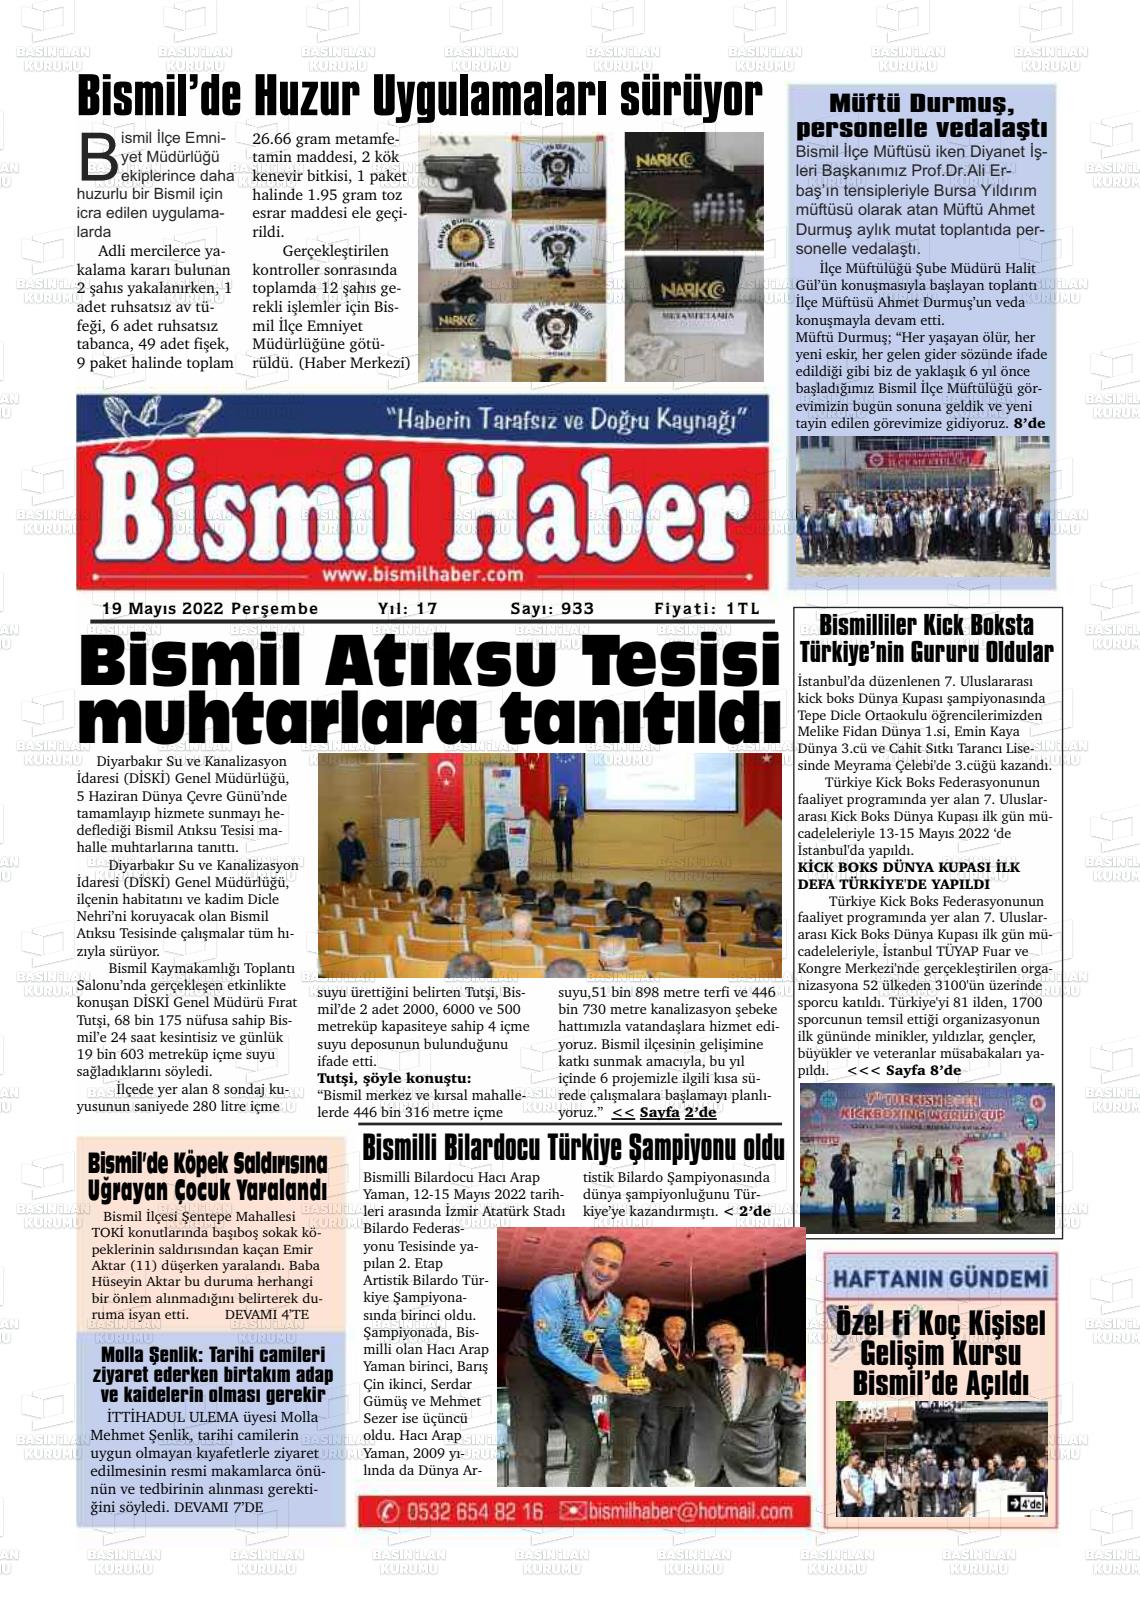 19 Mayıs 2022 Bismil Haber Gazete Manşeti